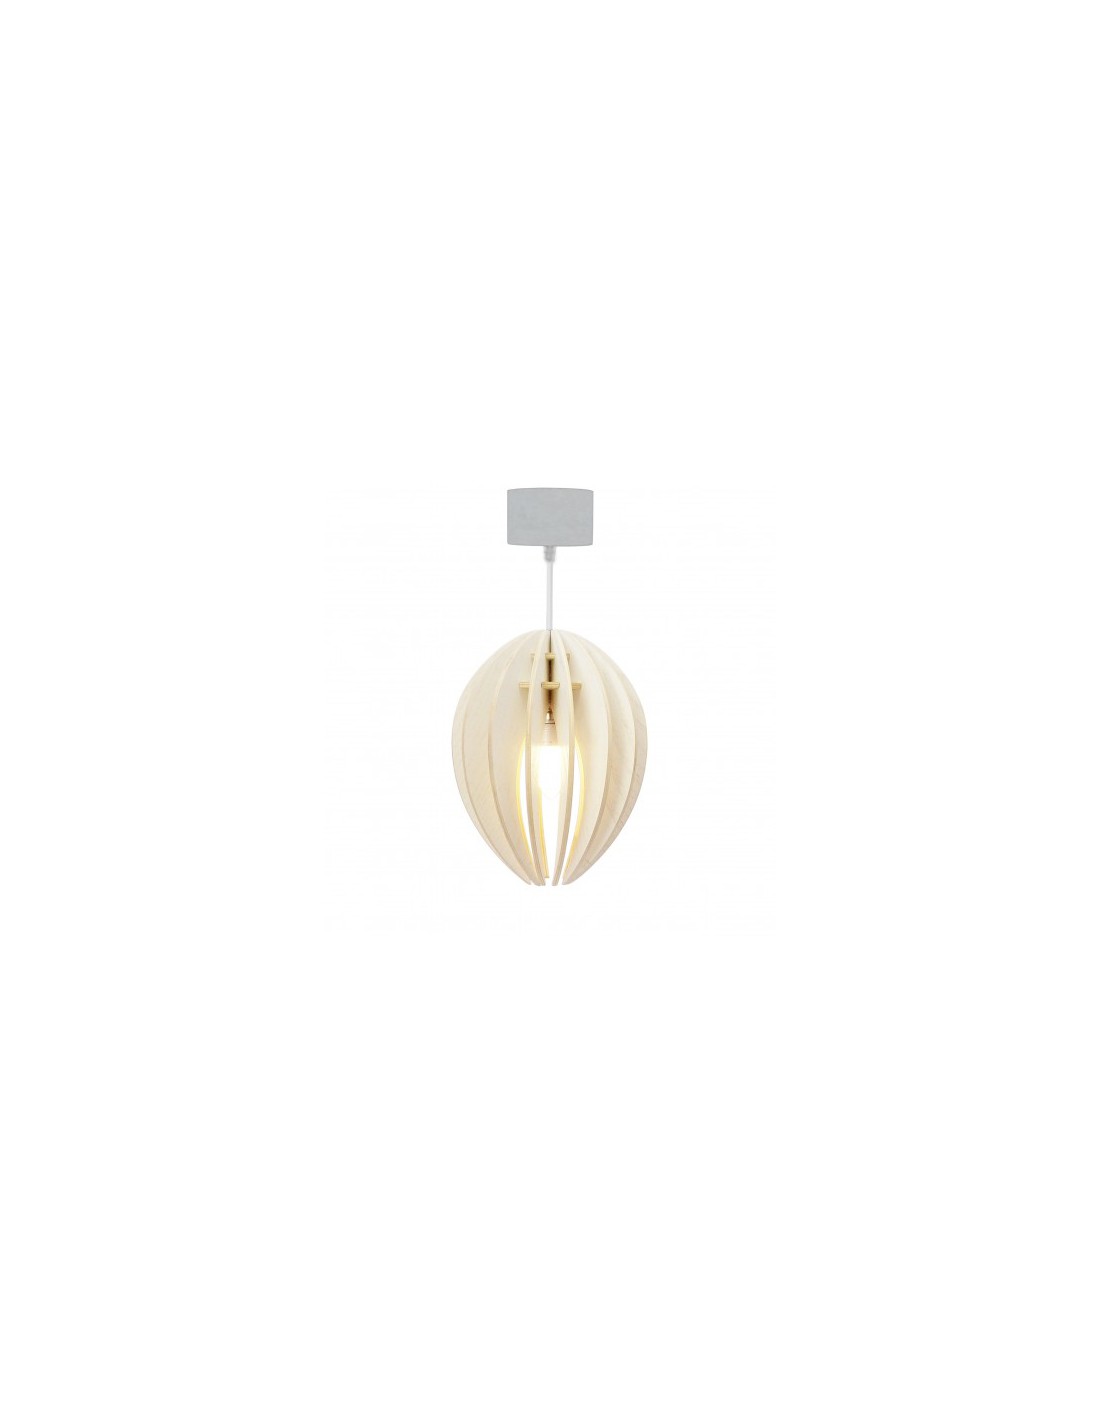 Lampe suspension bois et béton frêne teinté blanc cordon blanc